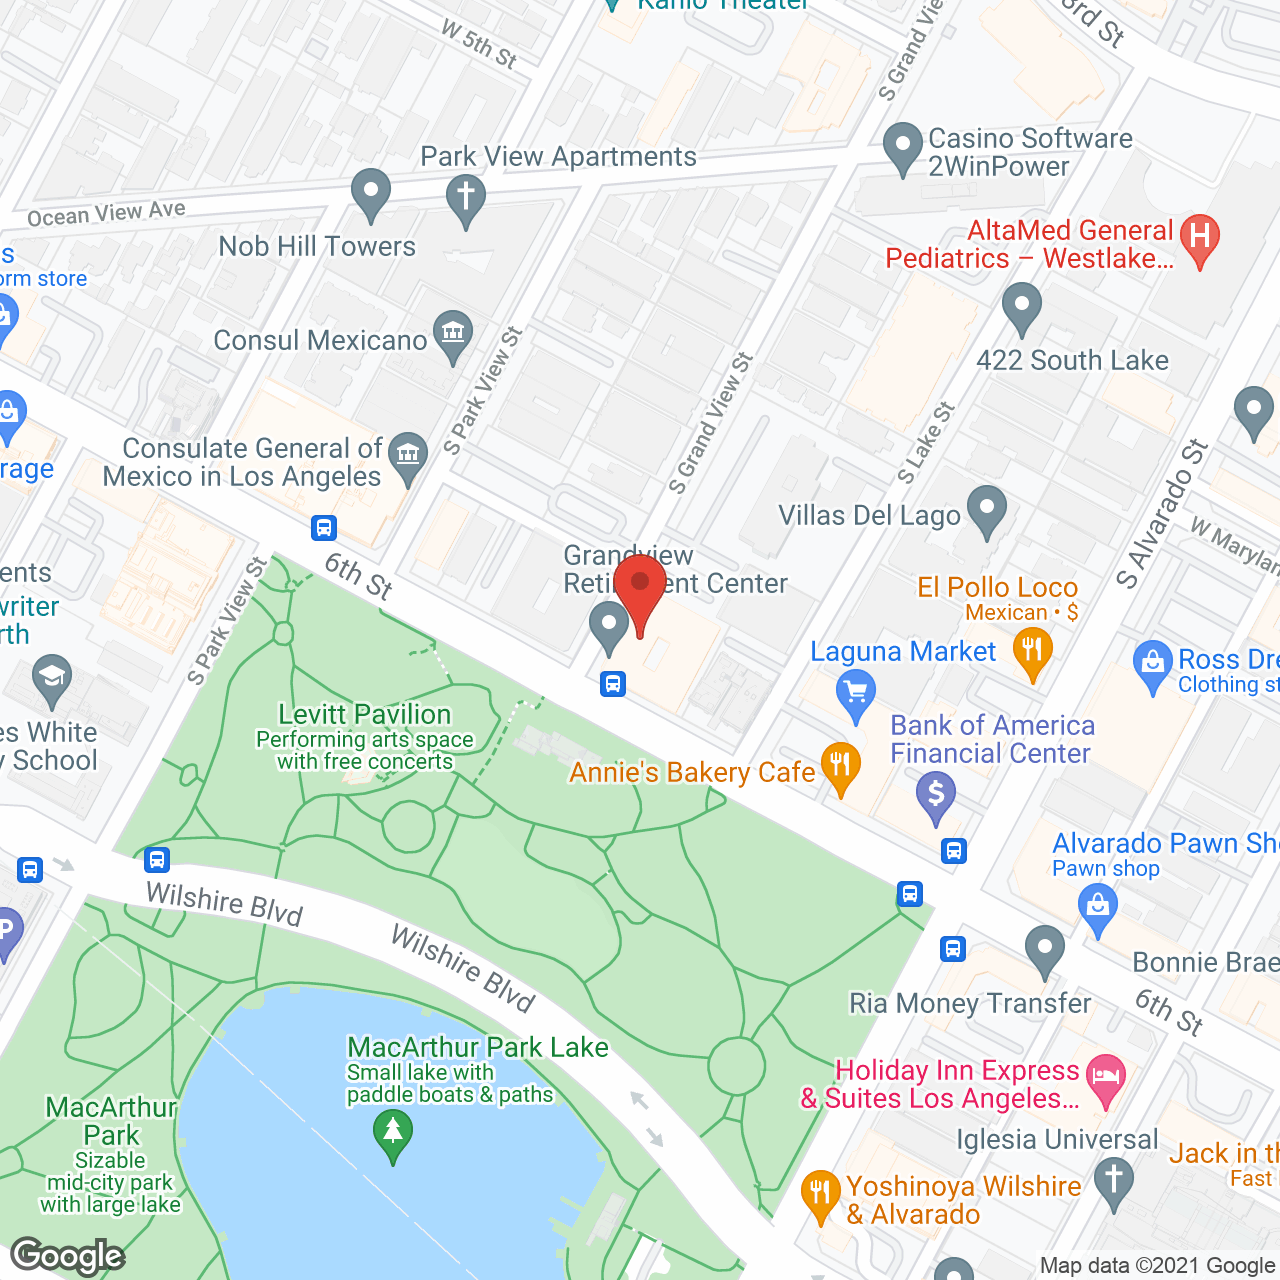 The Grandview in google map